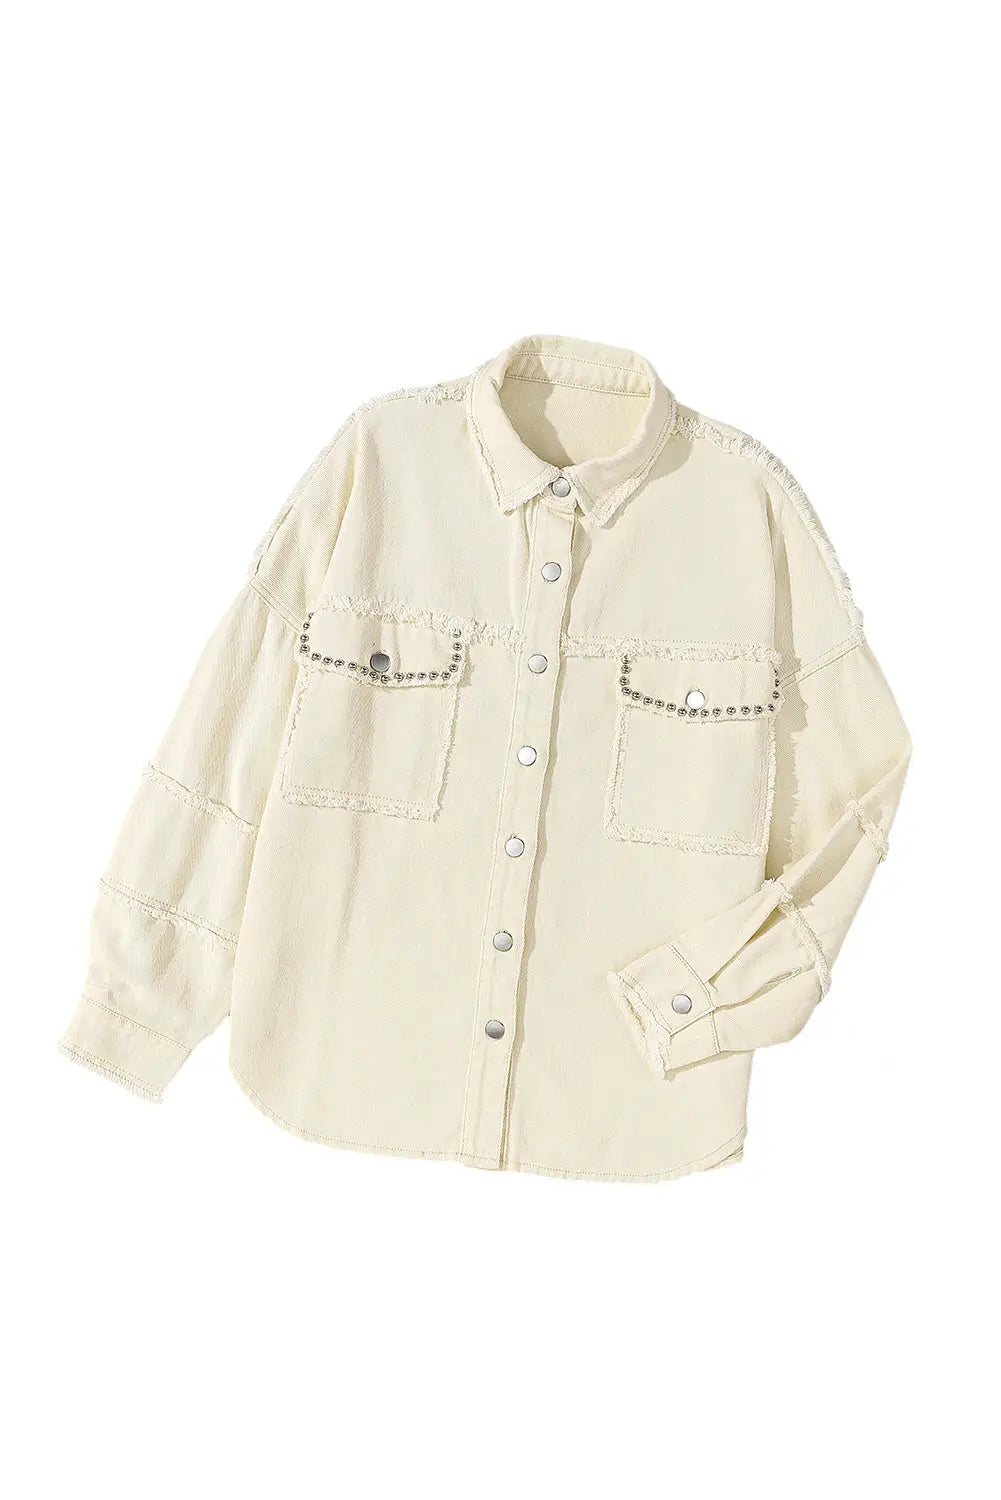 White frayed exposed seam denim jacket - outerwear